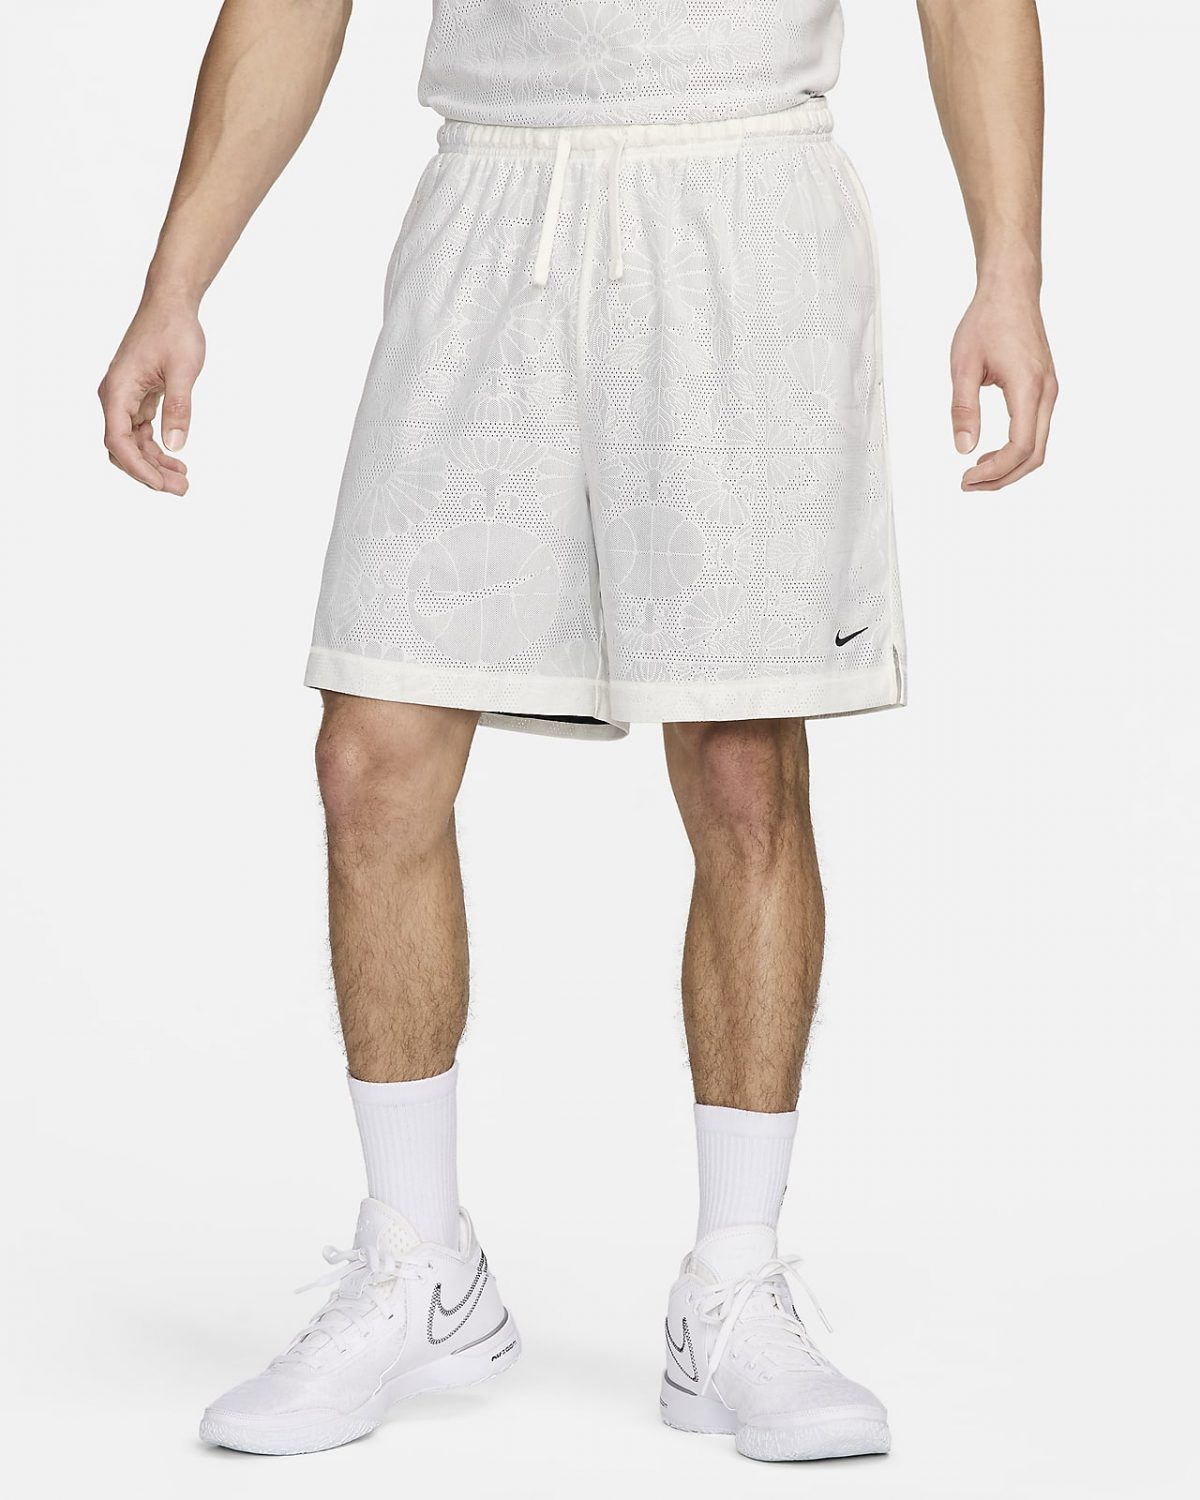 Мужские шорты Nike Standard Issue фото